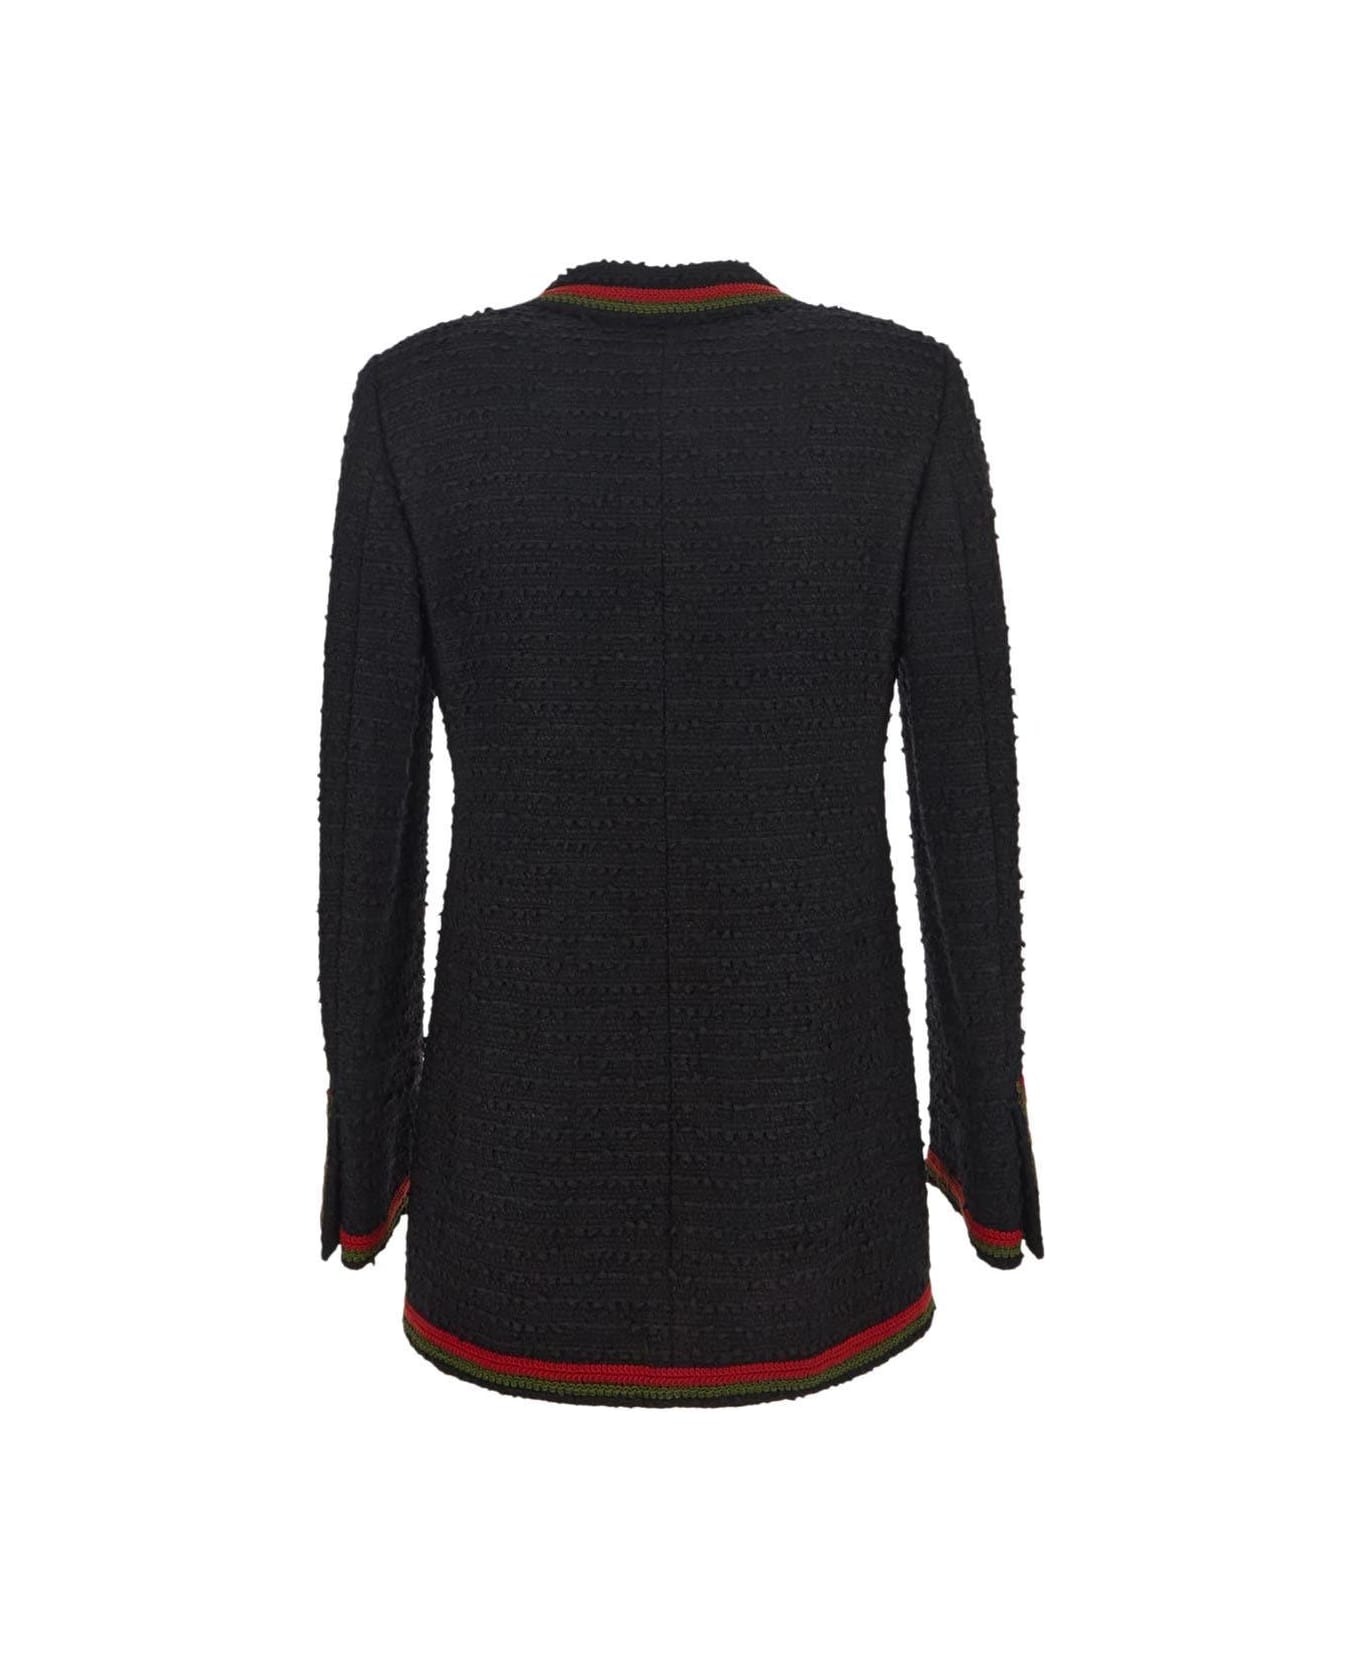 Gucci Tweed Jacket - Black